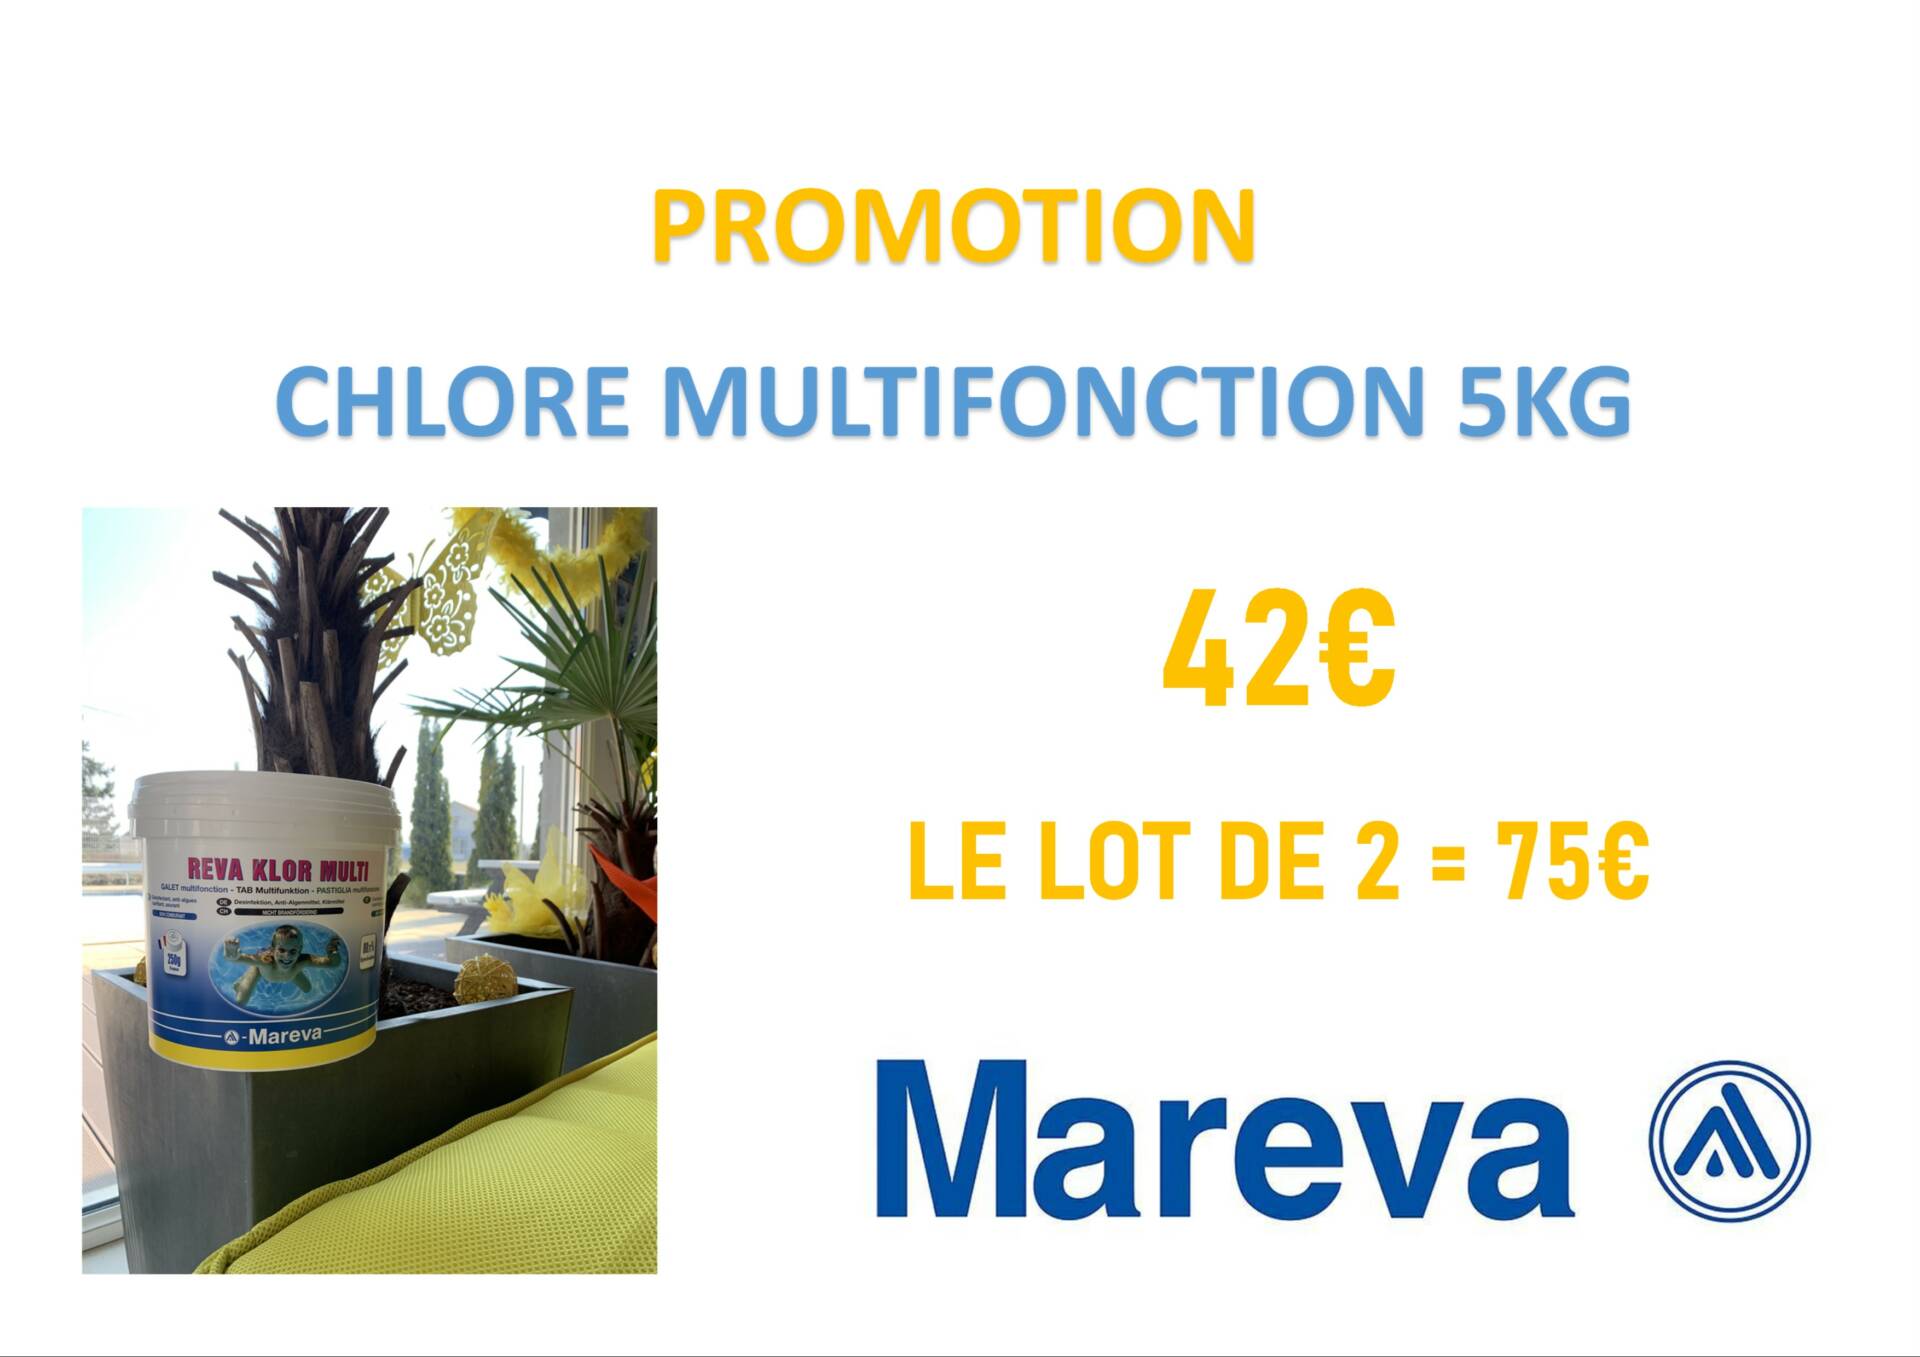 PROMOTION Chlore multifonction 5KG MAREVA